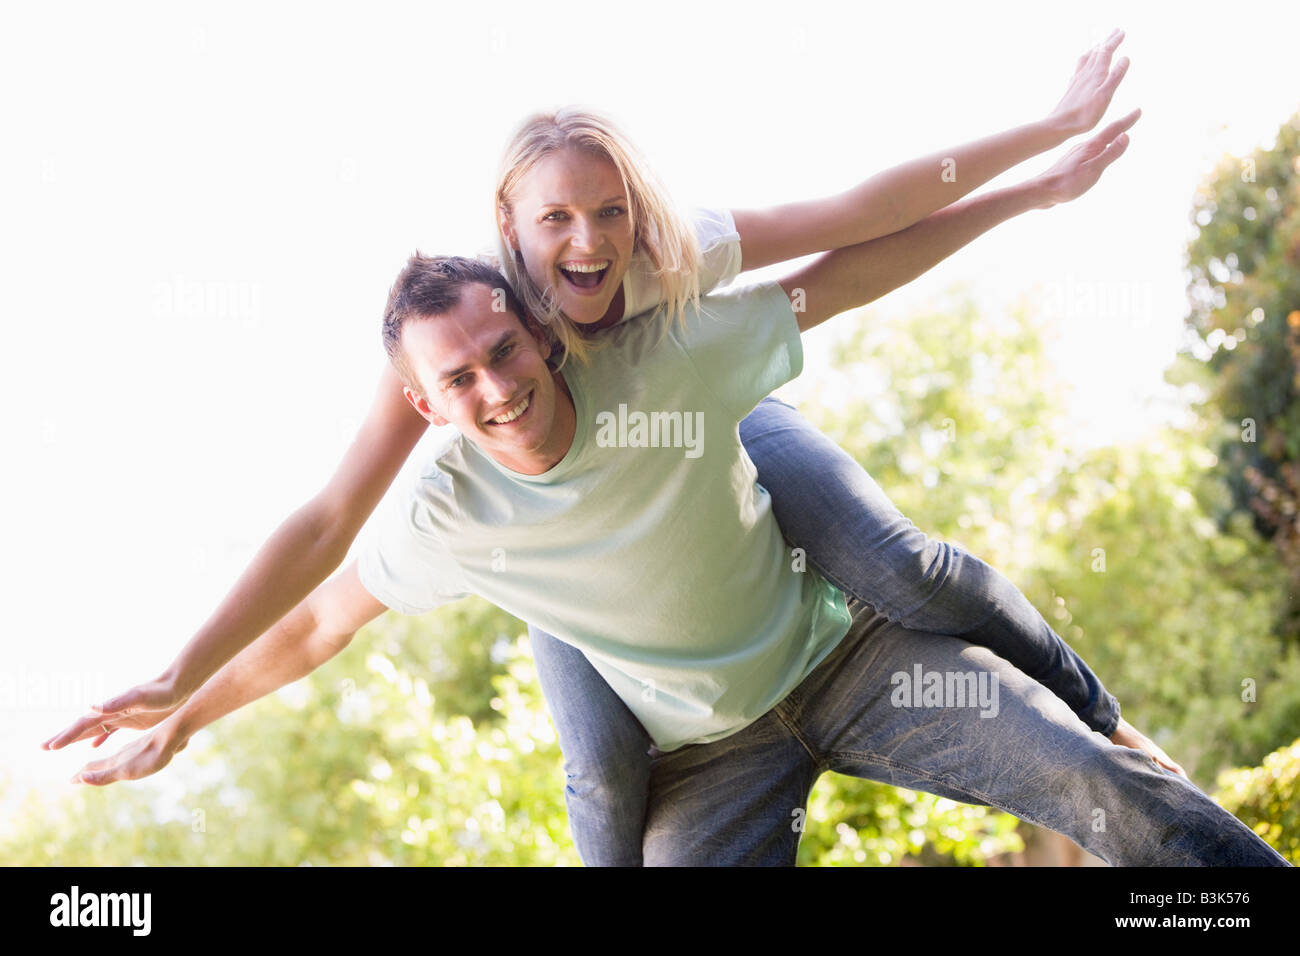 Man giving woman piggyback ride outdoors smiling Stock Photo